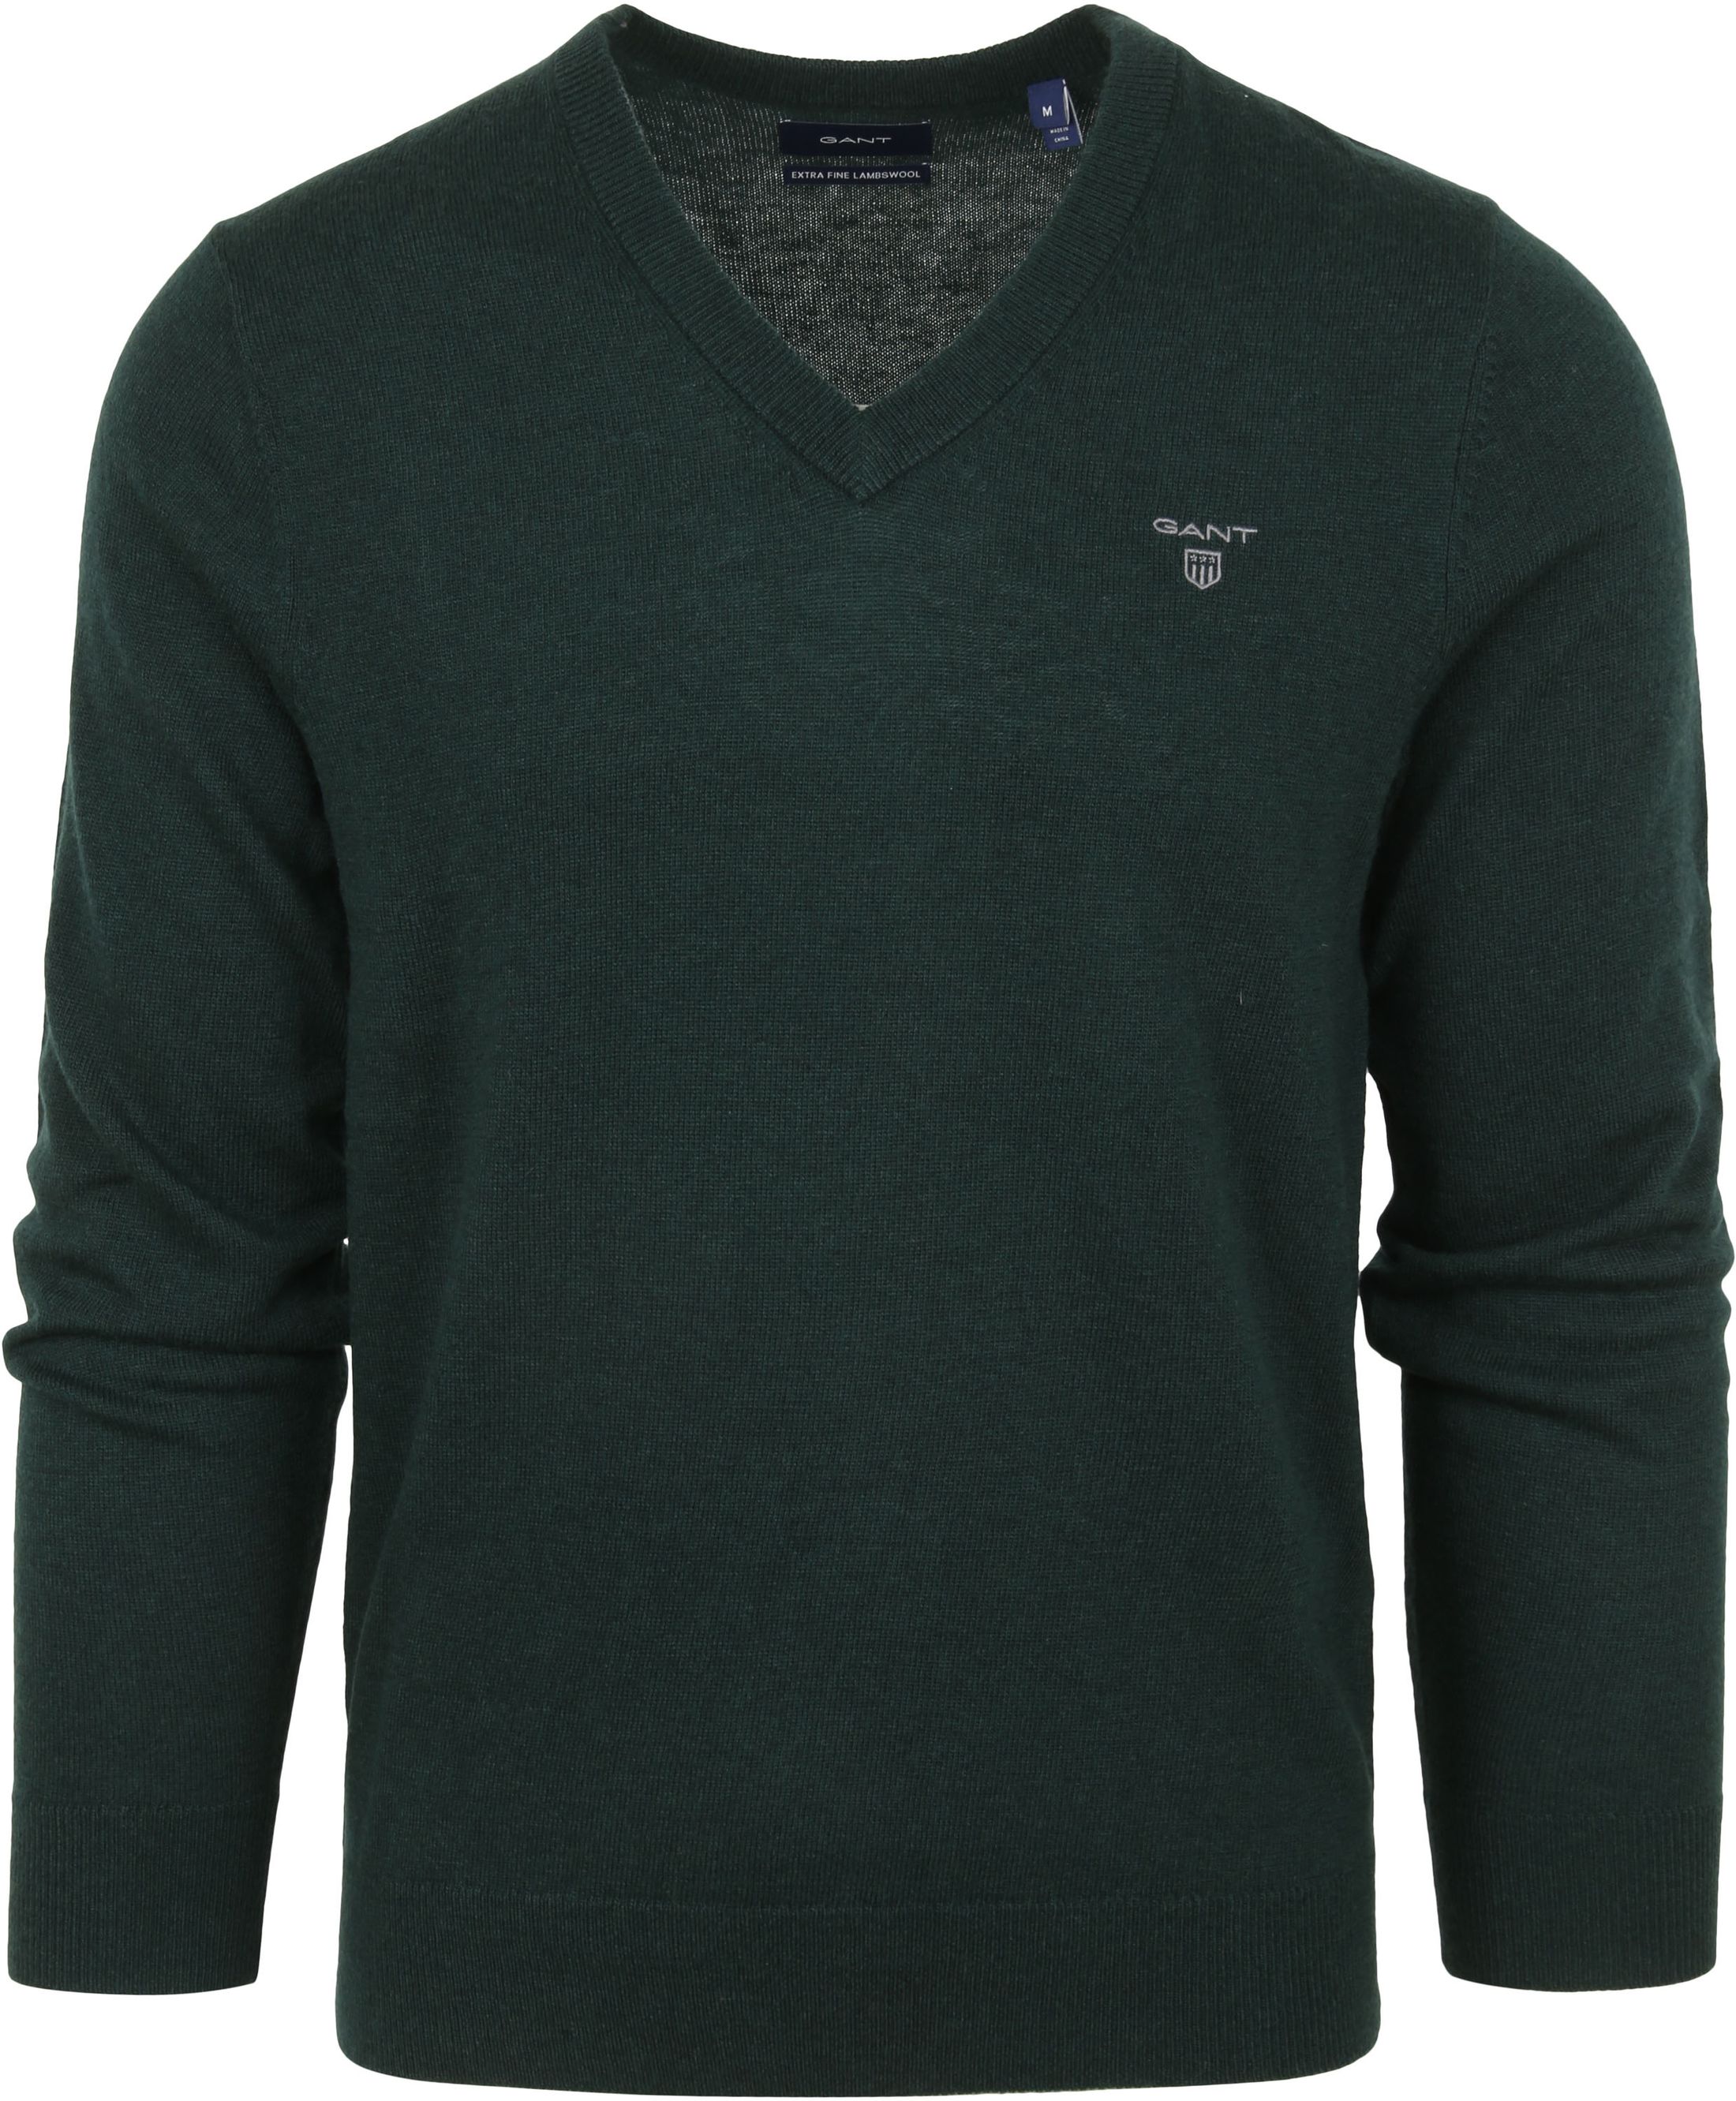 Gant Sweater Lambswool Dark Dark Green Green size L